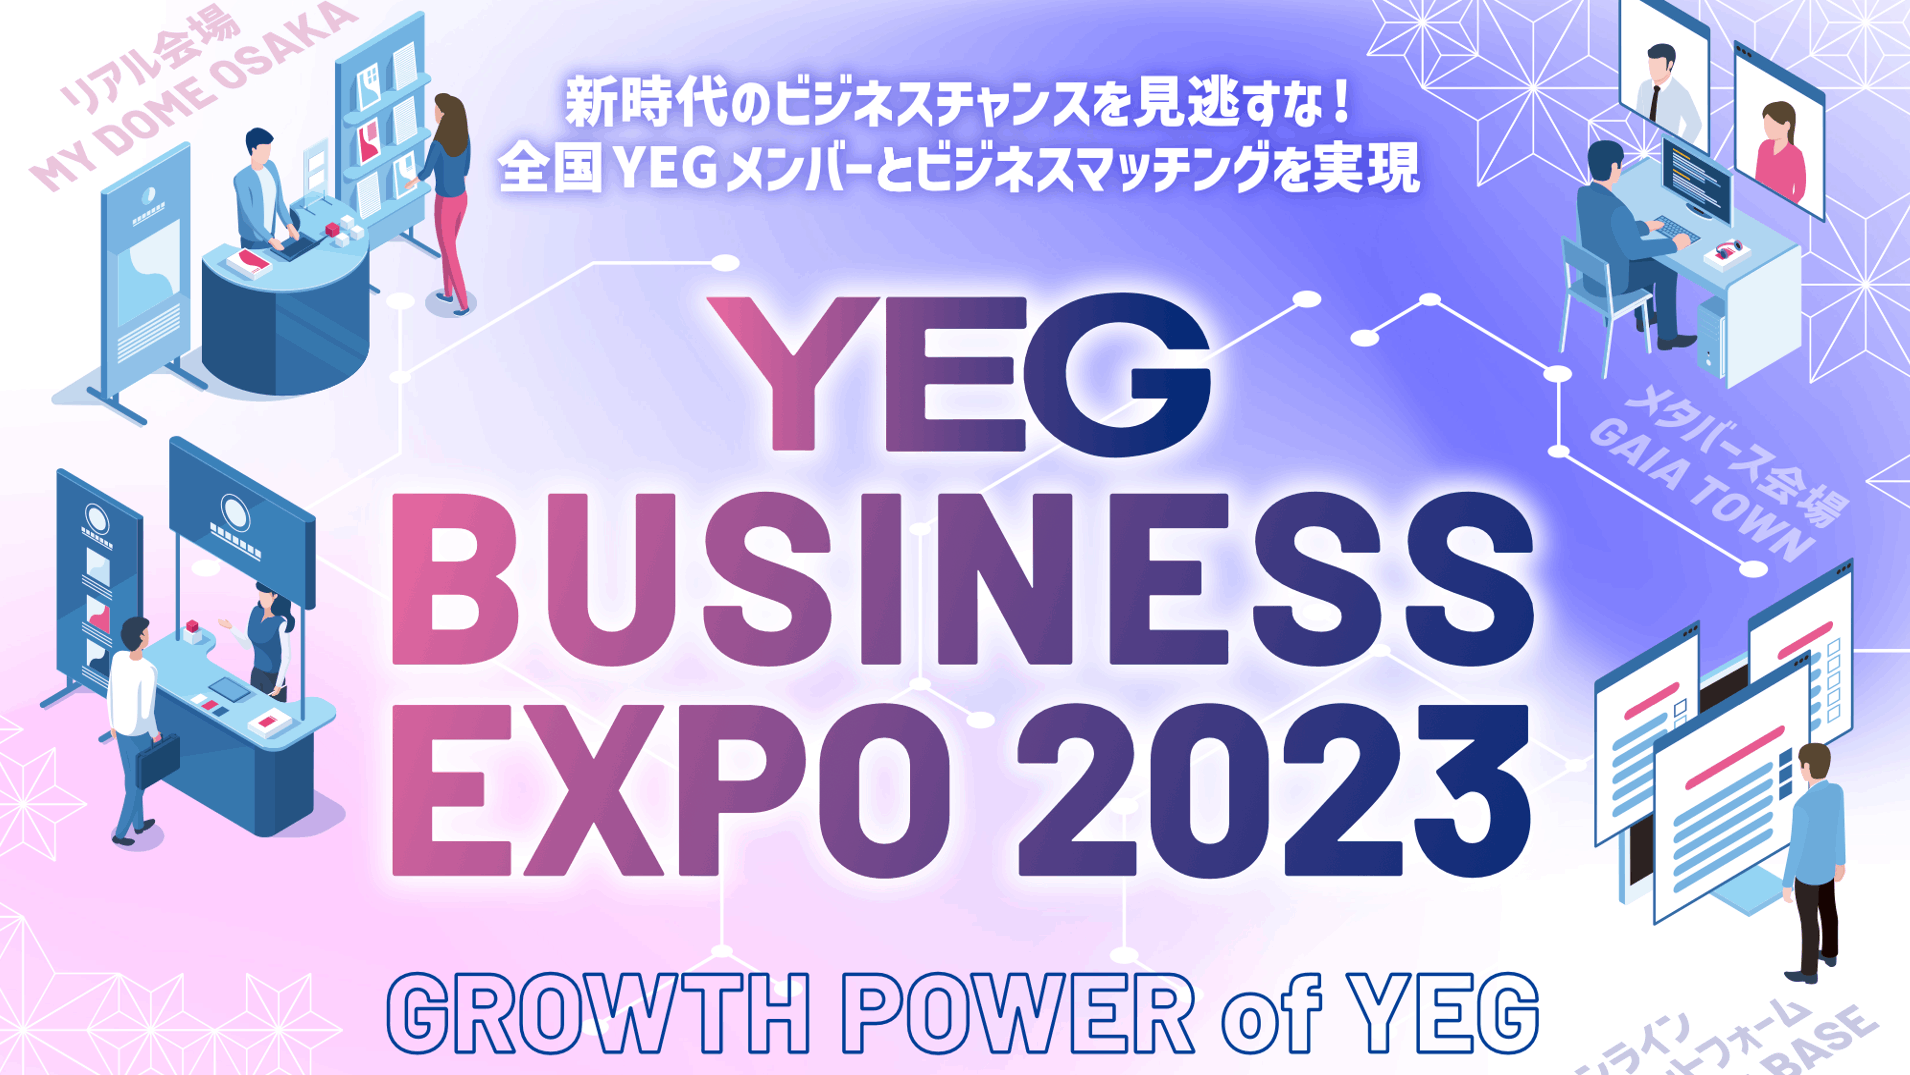 ṼrWlX`XIYEG BUSINESS EXPO2023 `GROWTH POWER of YEG`J